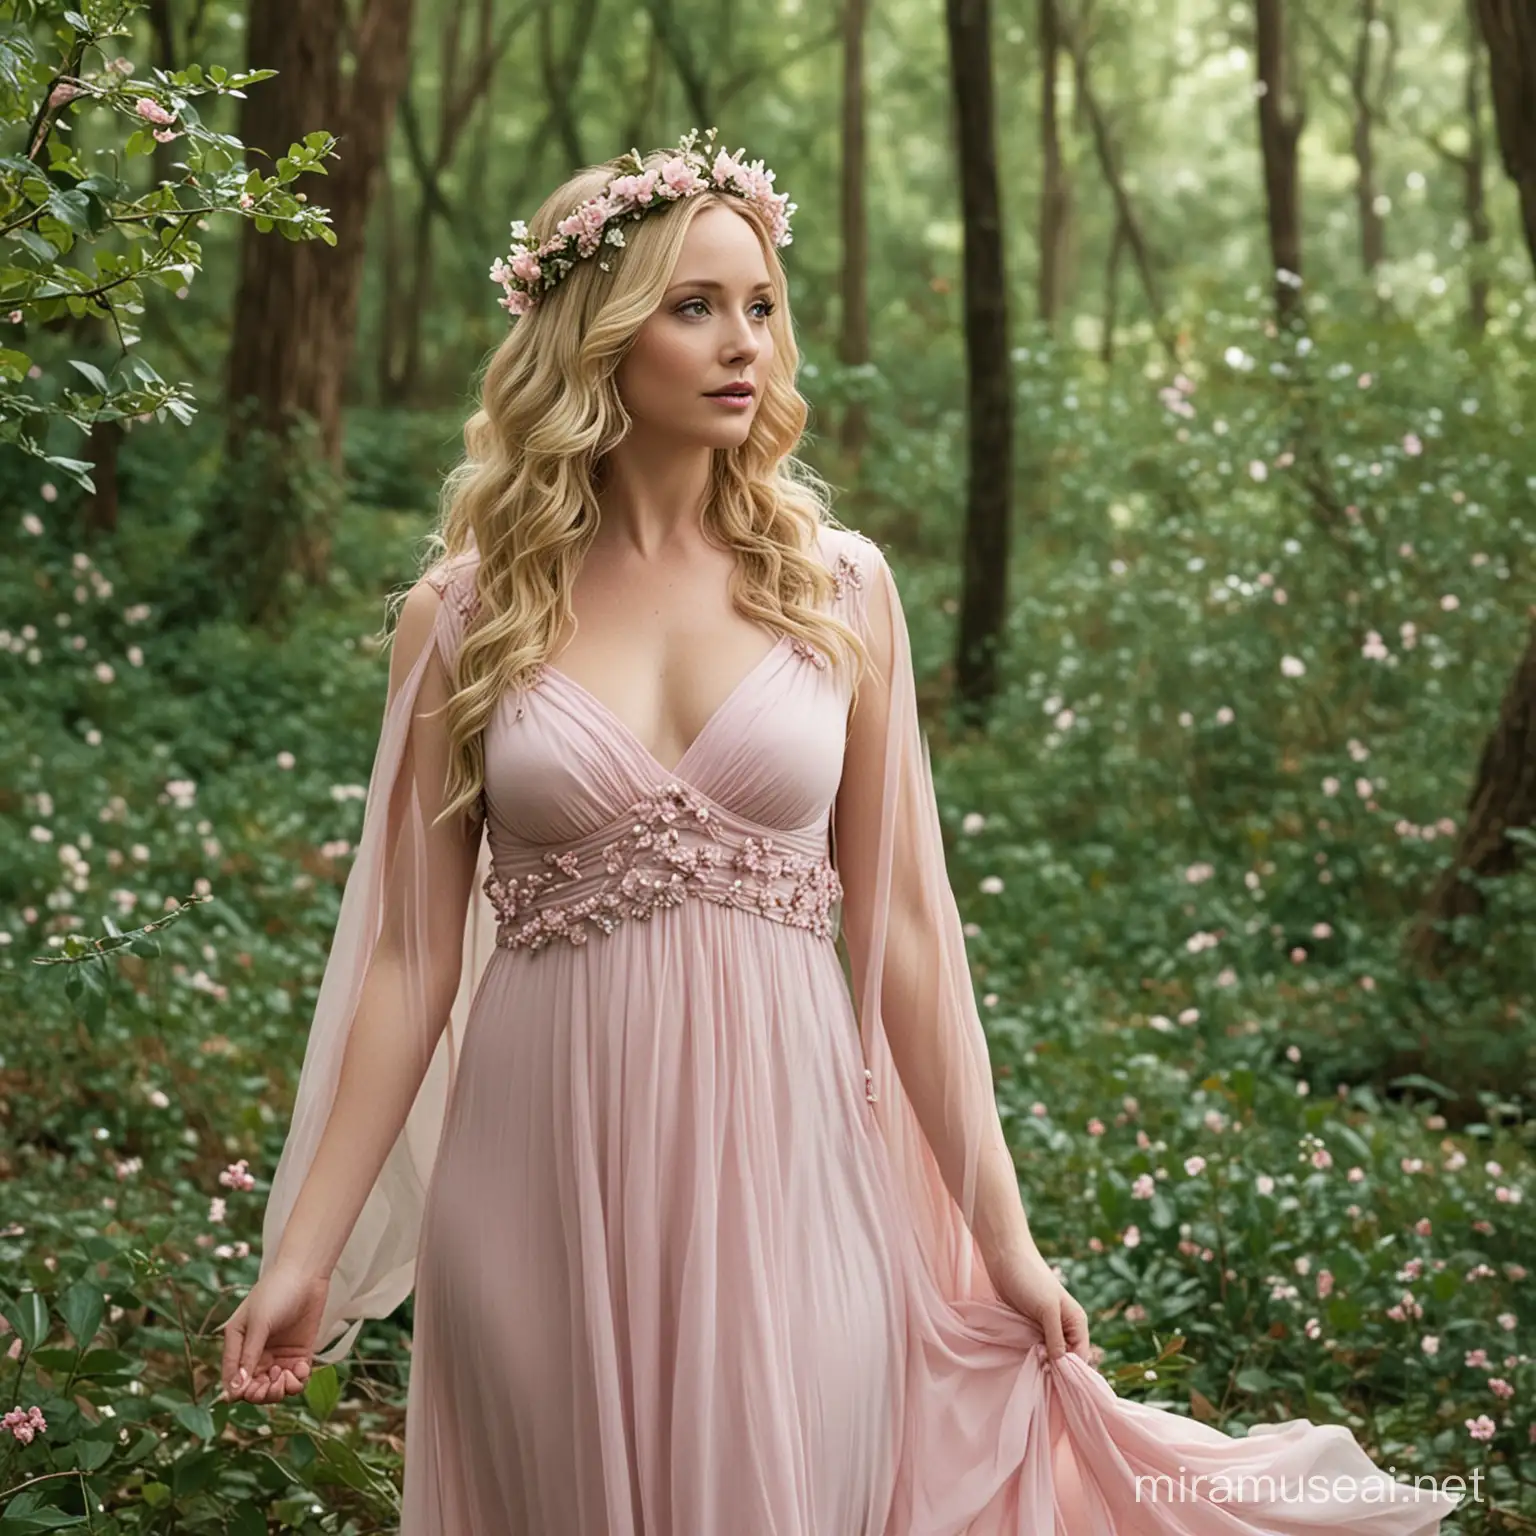 Candice Accola Portraying Ariadne Greek Goddess in Enchanted Forest